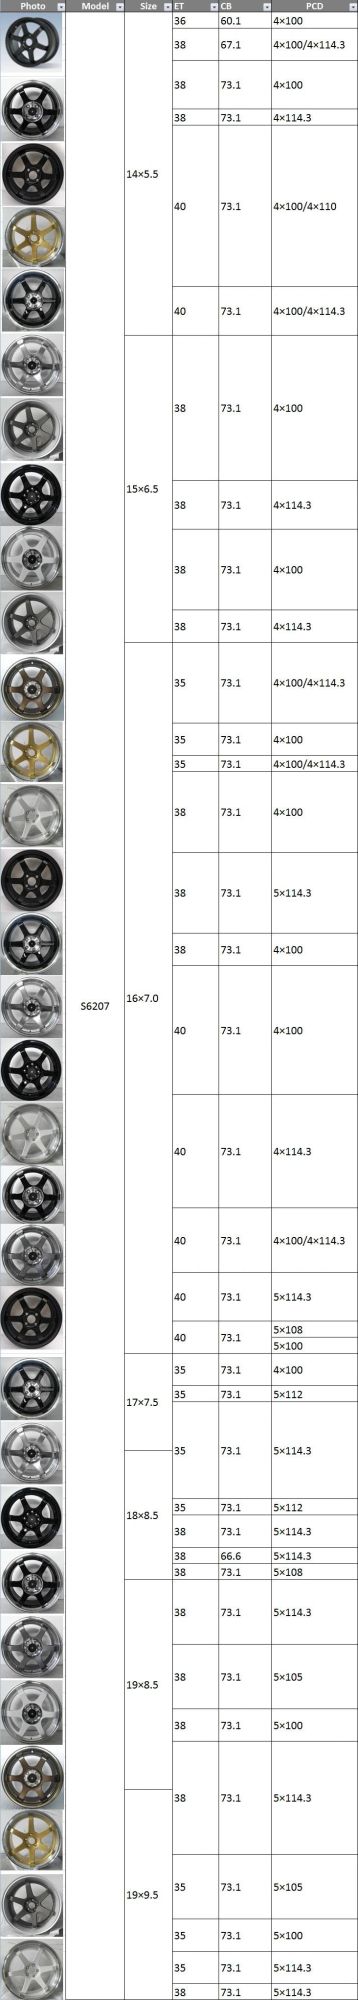 S6207 JXD Brand Auto Spare Parts Alloy Wheel Rim Aftermarket Car Wheel